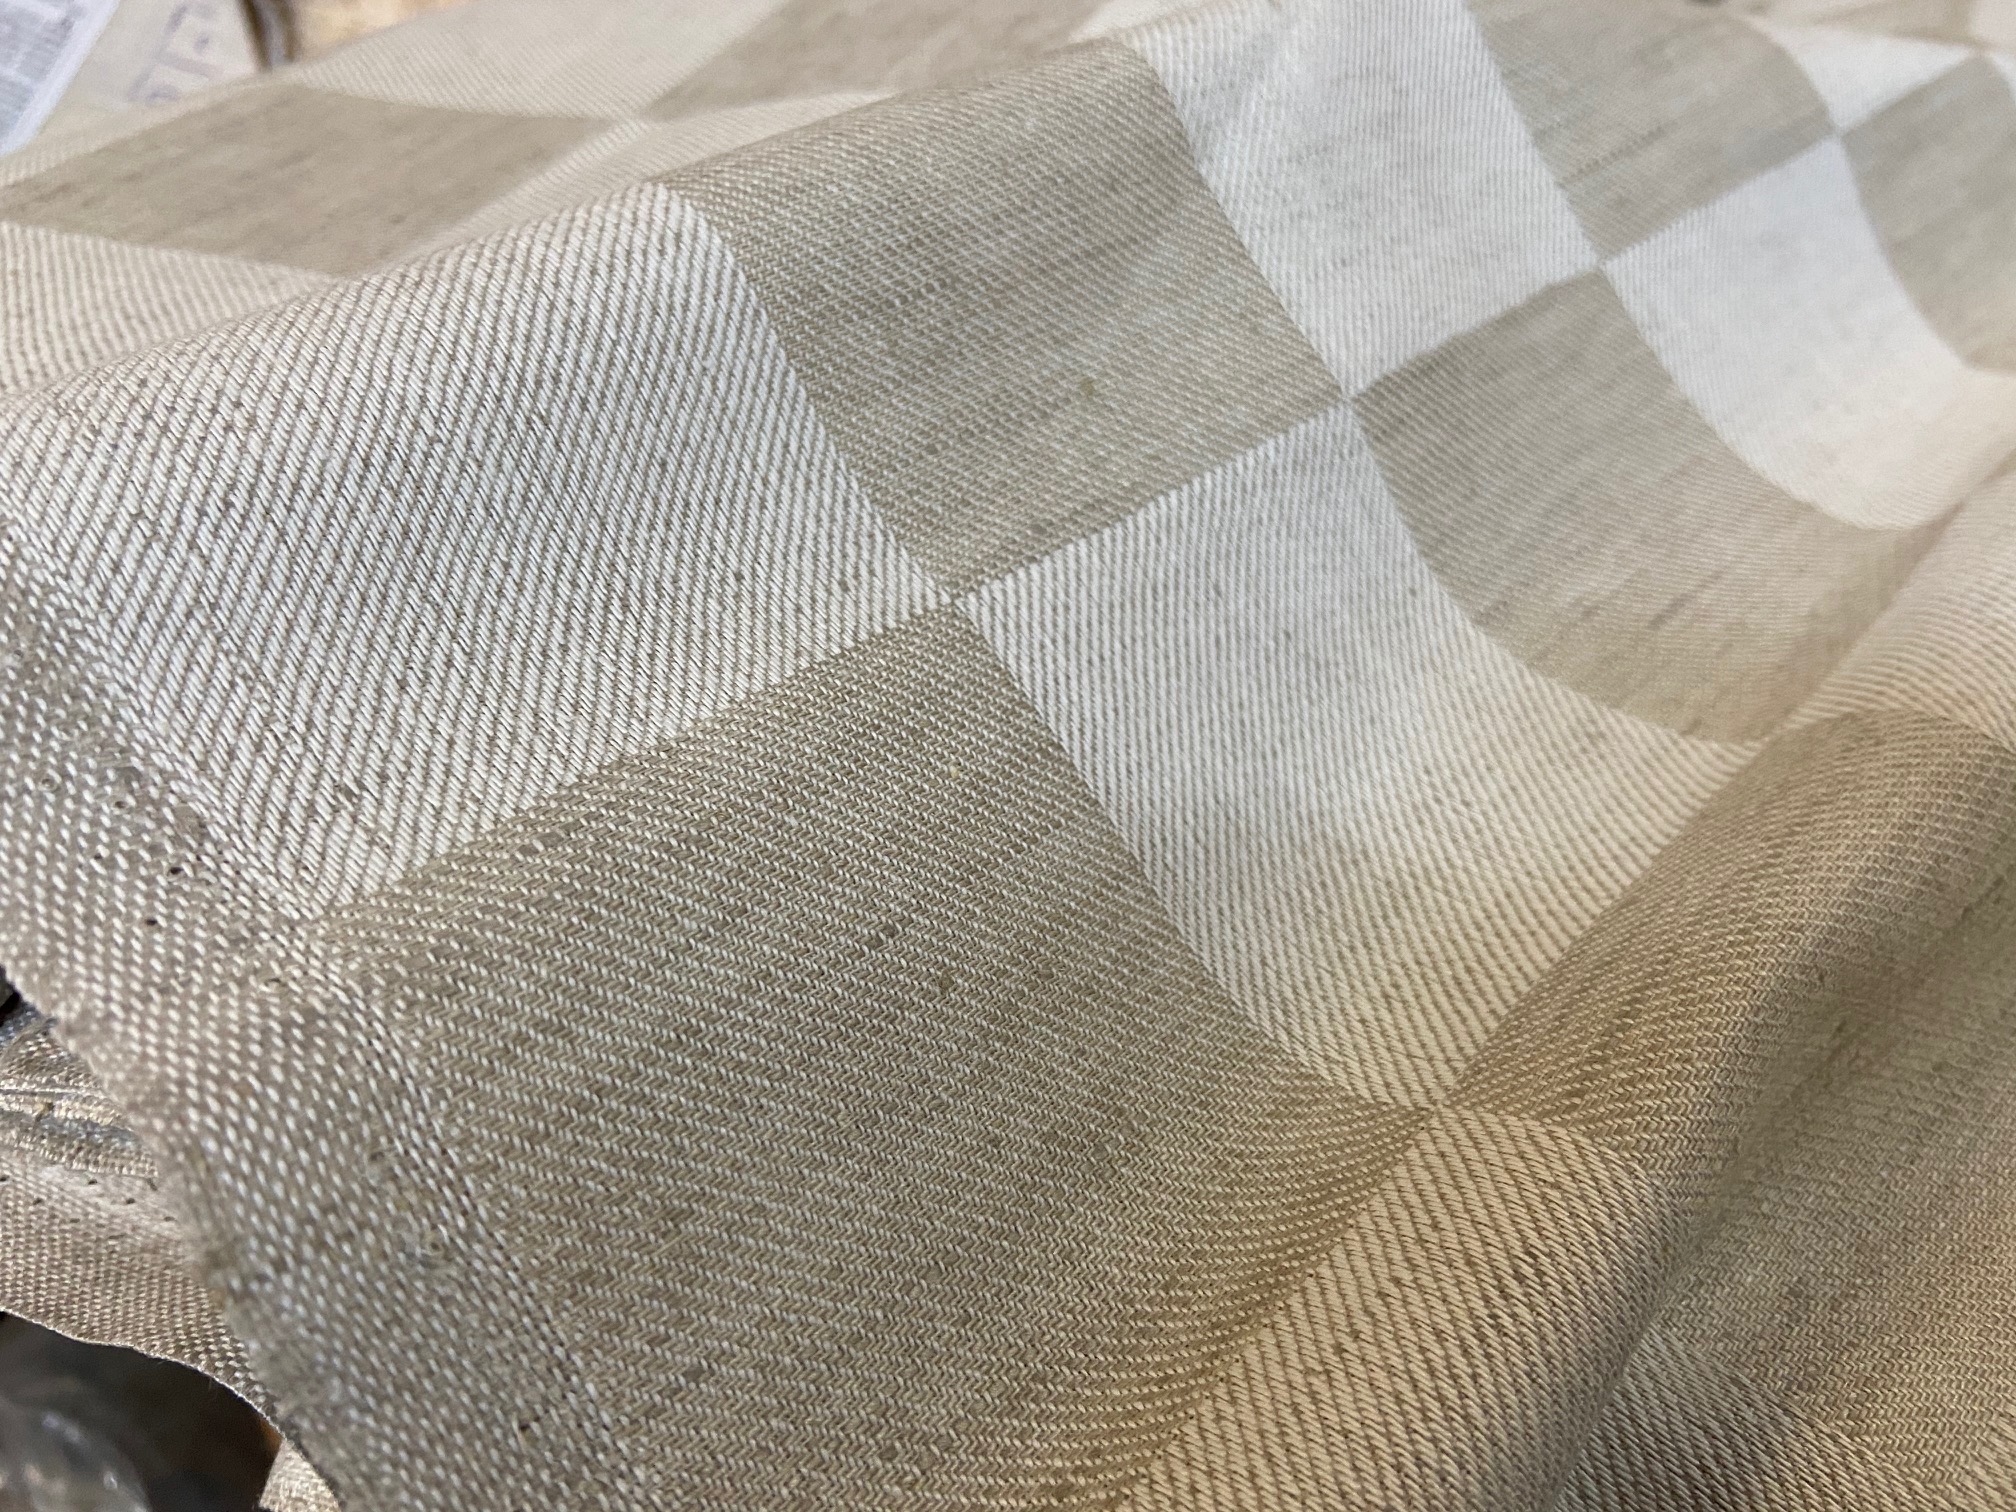 Table Linen (50% linen + 50% cotton), art. 101074, weight 210 g/m², width 150cm. Price per meter, 21% VAT incl.